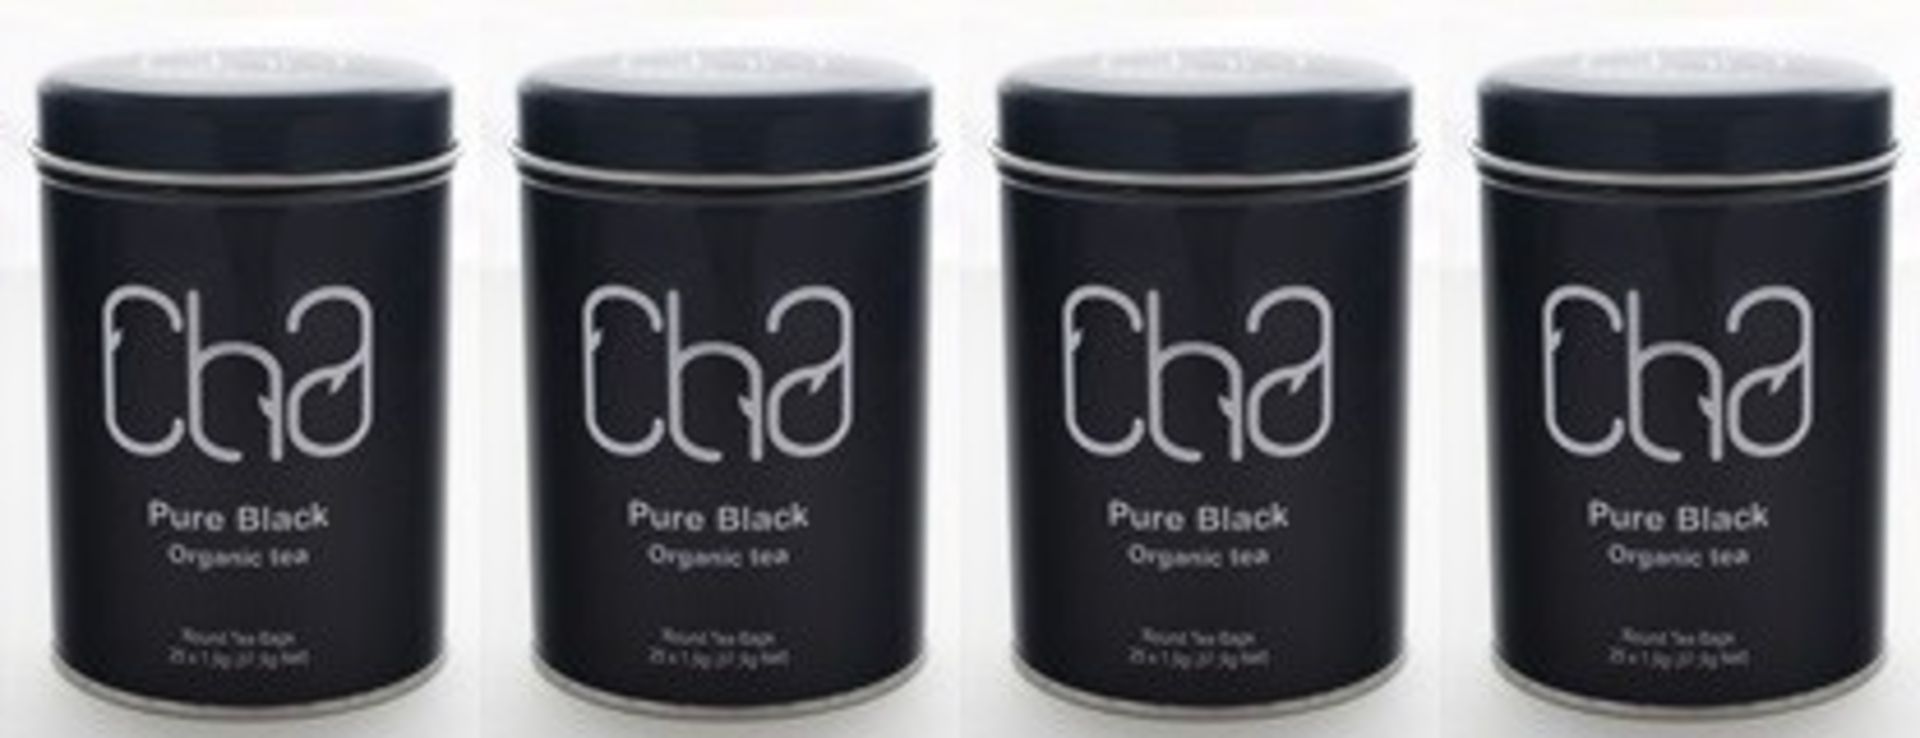 120 x Tins of CHA Organic Tea - PURE BLACK - 100% Natural and Organic - Includes 120 Tins of 25 Roun